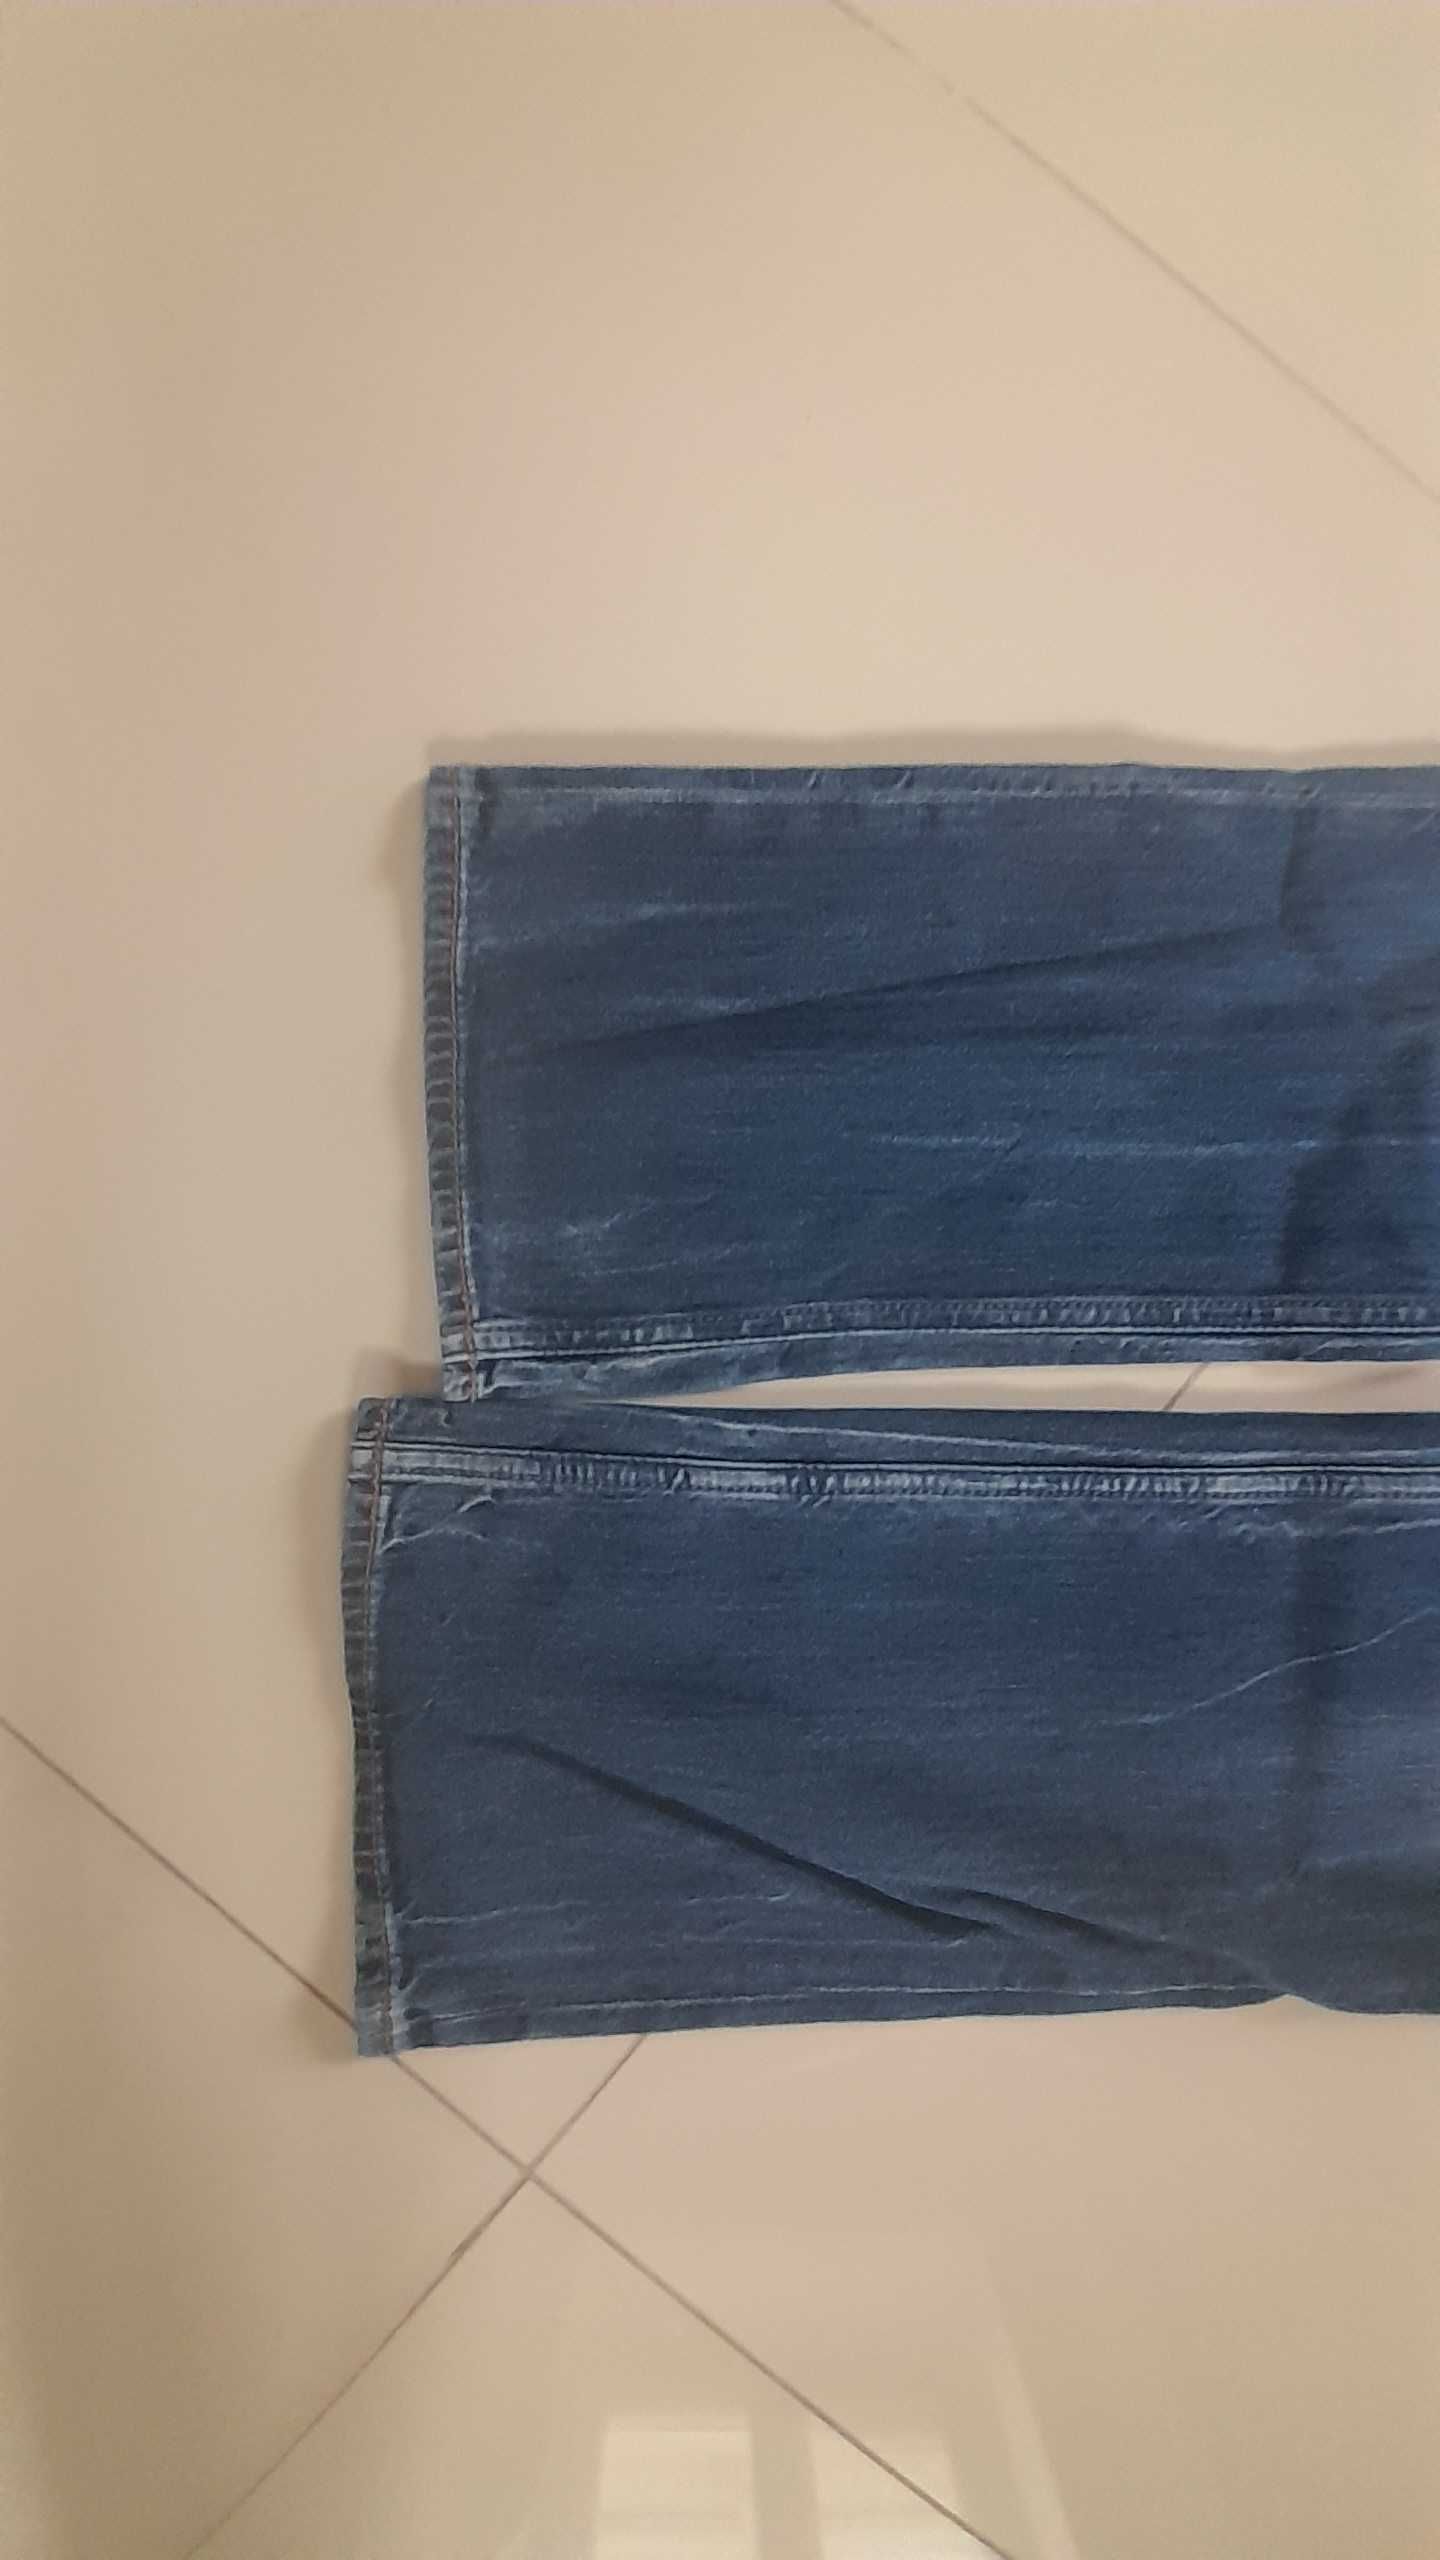 Jeans  spodnie  Tommy Hilfiger damskie  stan bdb